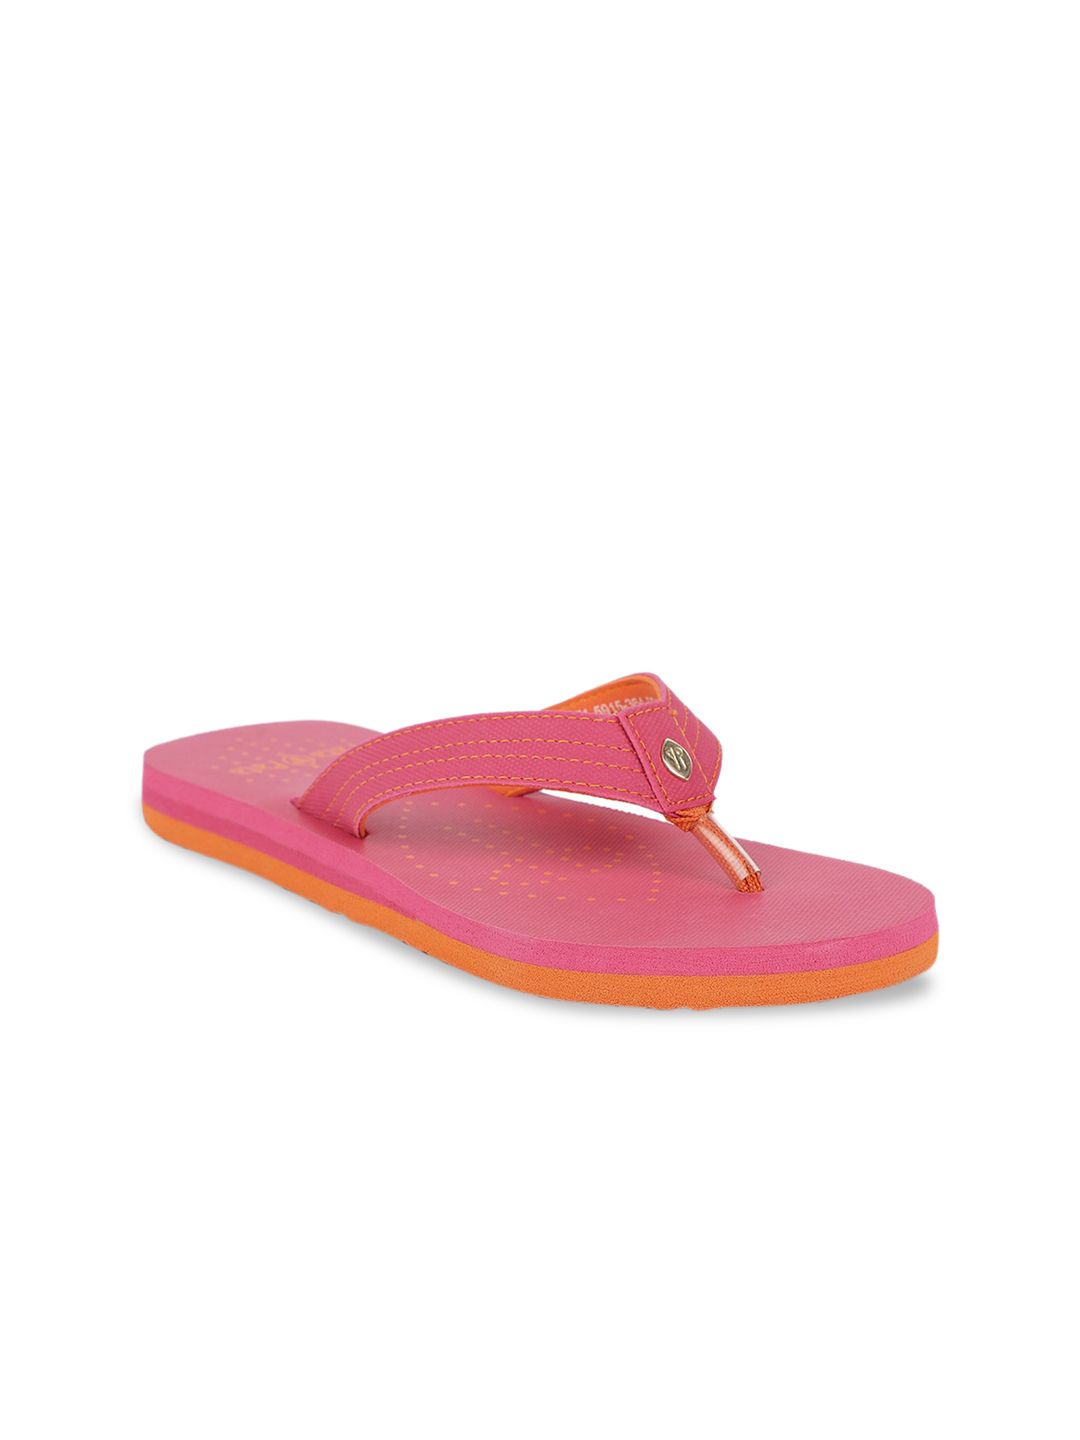 Bata Women Pink Solid Thong Flip-Flops Price in India